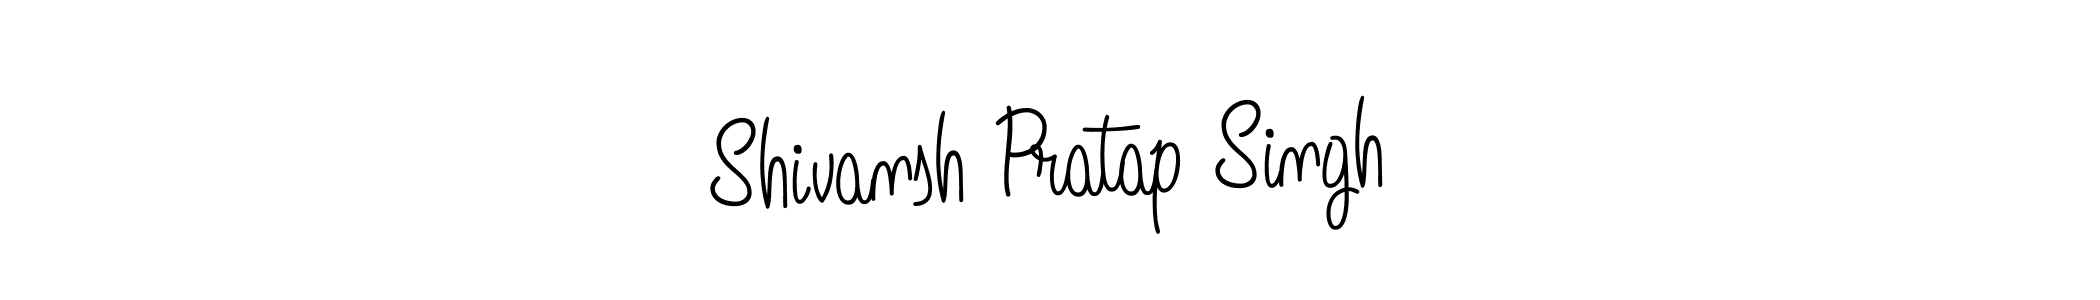 How to Draw Shivansh Pratap Singh signature style? Angelique-Rose-font-FFP is a latest design signature styles for name Shivansh Pratap Singh. Shivansh Pratap Singh signature style 5 images and pictures png